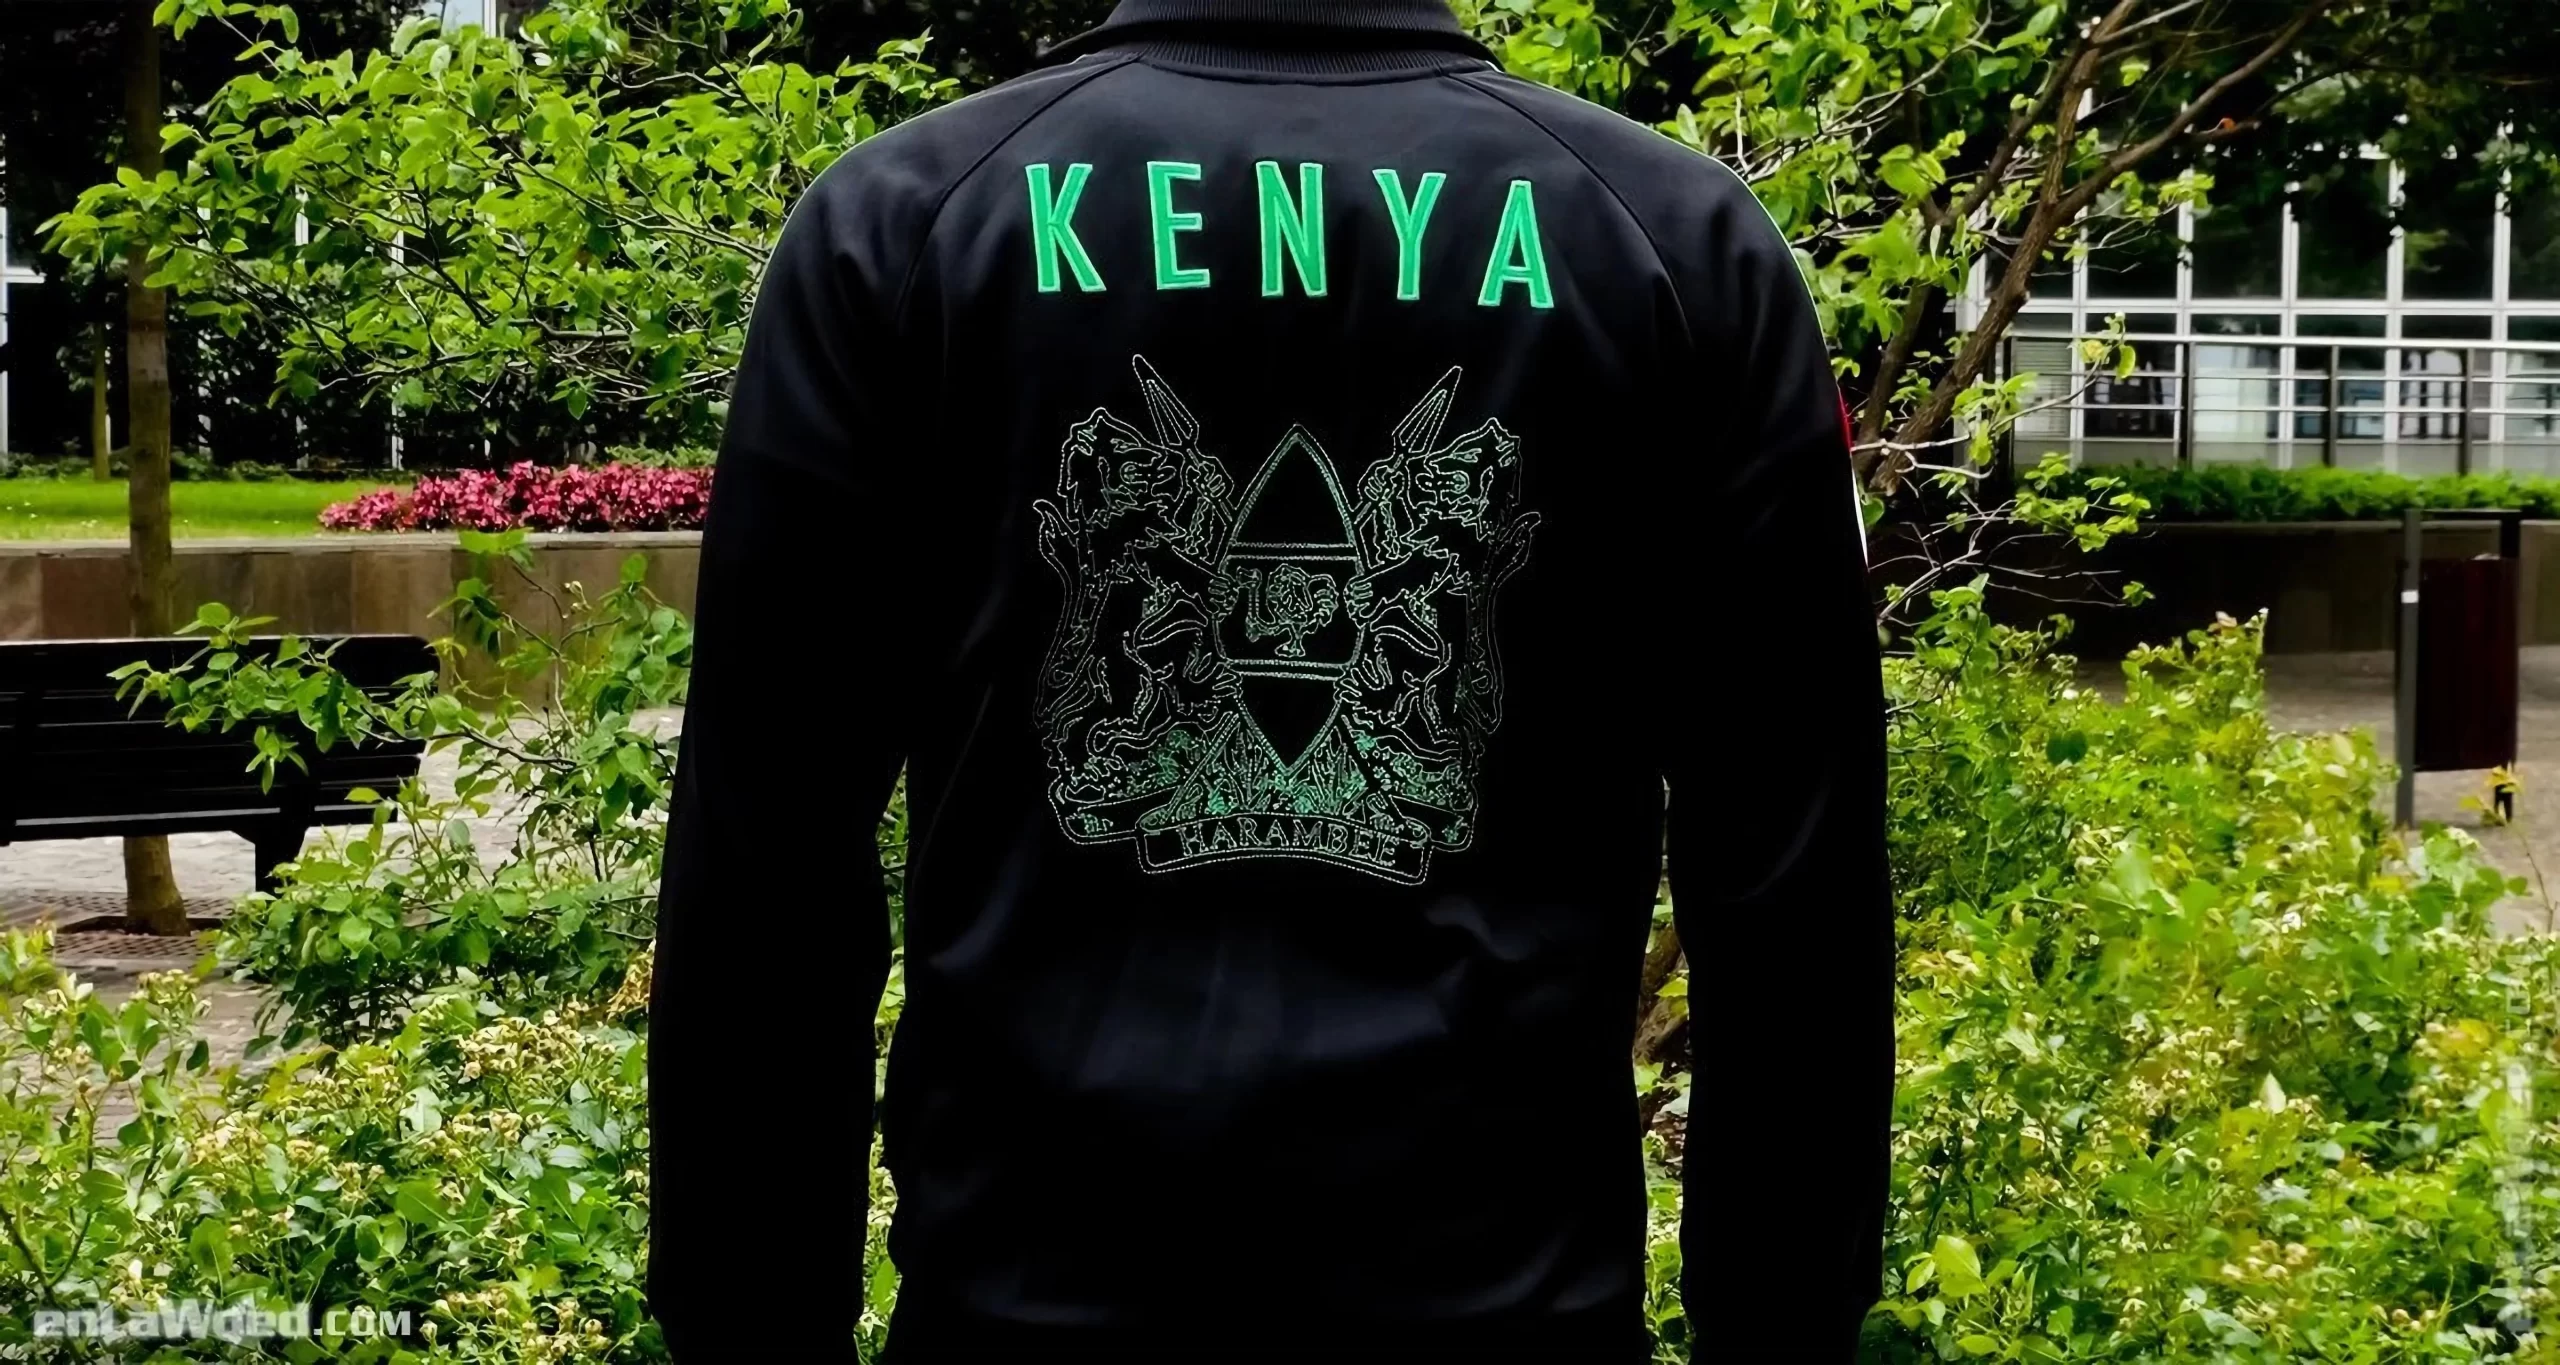 Men’s 2007 Kenya Harambee TT by Adidas Originals: Breakthrough (EnLawded.com file #lmcgk4pedesbatg8do)